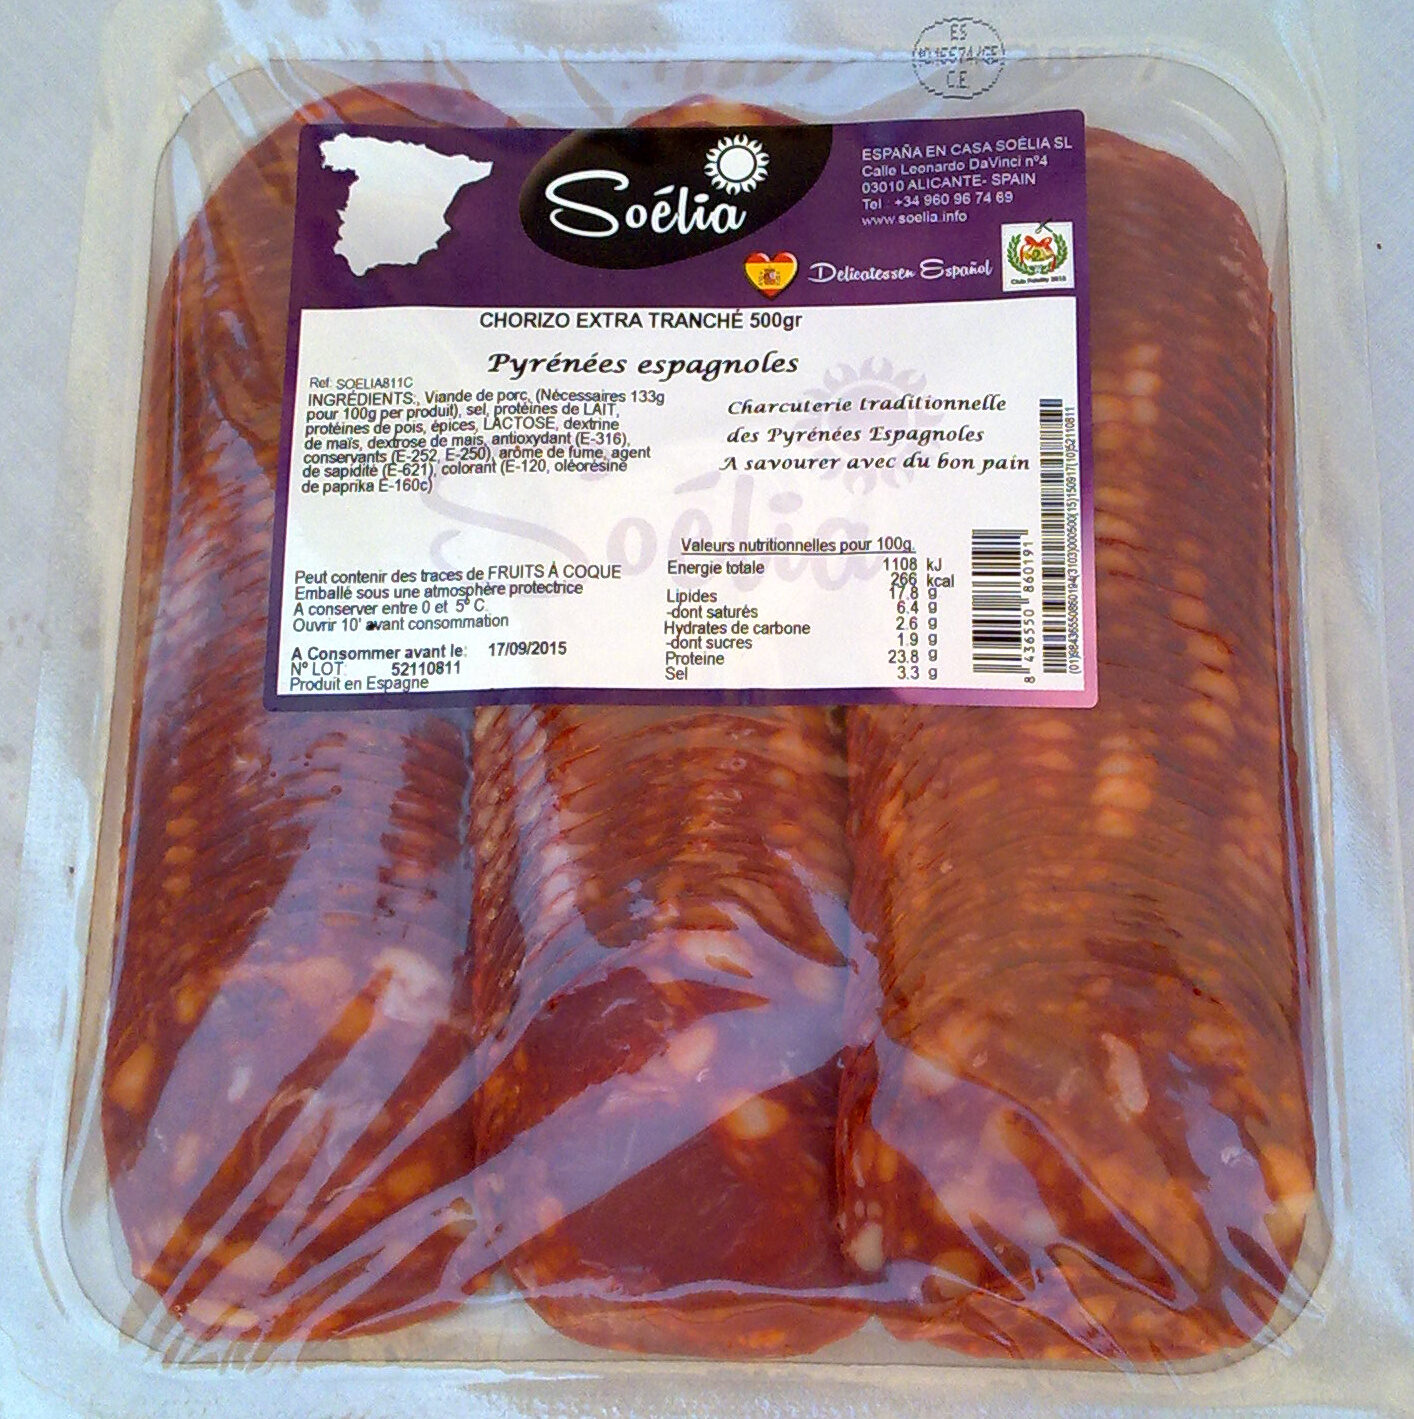 Chorizo extra tranché 500gr - Pyrénées espagnoles - Soélia - Producto - fr